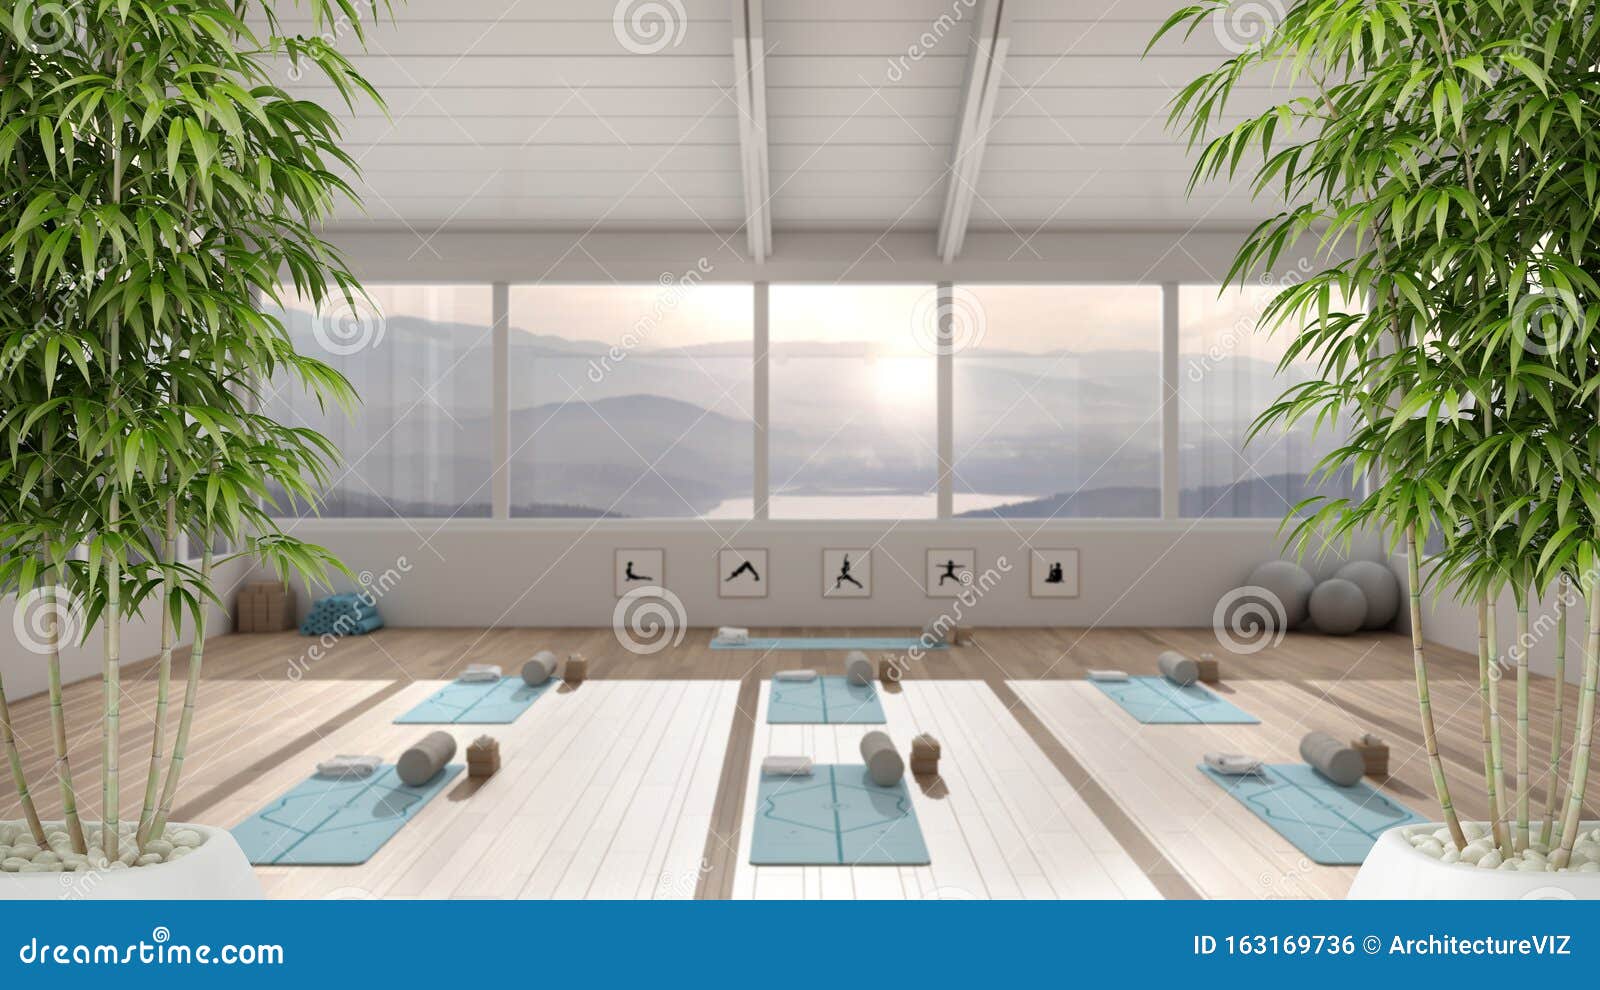 https://thumbs.dreamstime.com/z/zen-interior-potted-bamboo-plant-natural-design-concept-empty-yoga-studio-minimal-open-space-spatial-organization-mats-163169736.jpg